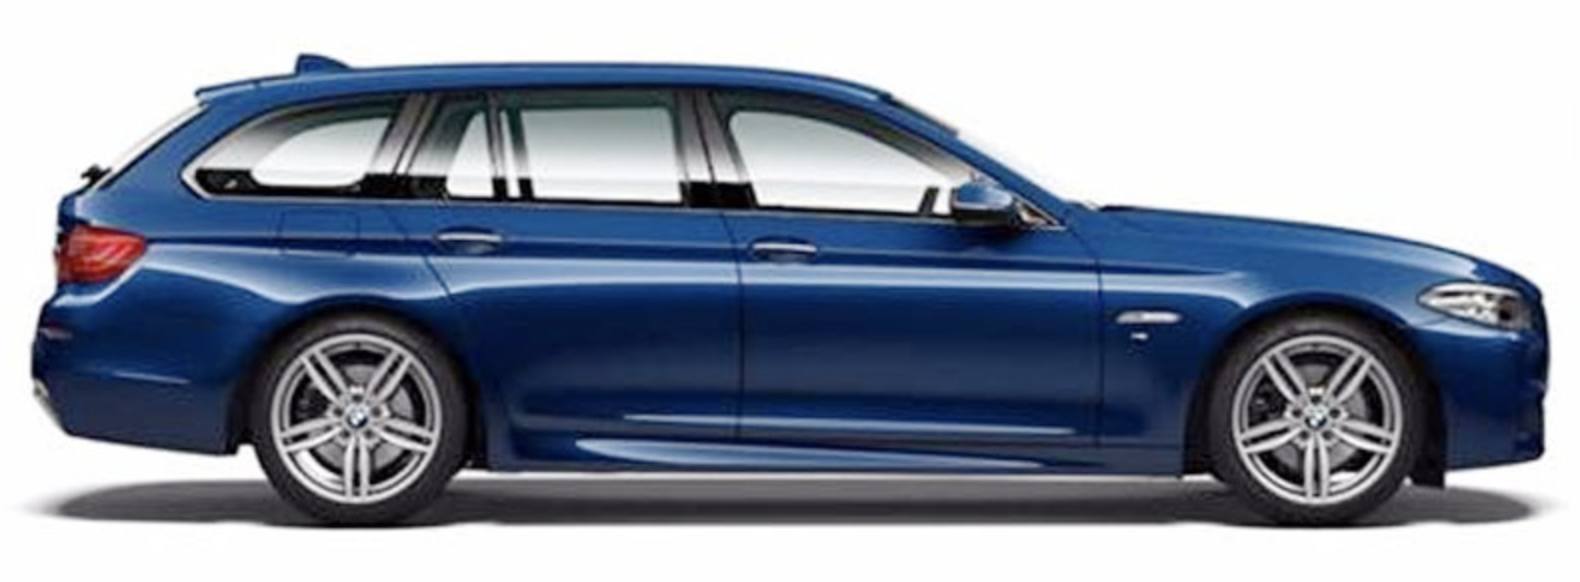 Afbeelding van 5TSG83, blauwe BMW 535I Touring stationwagen